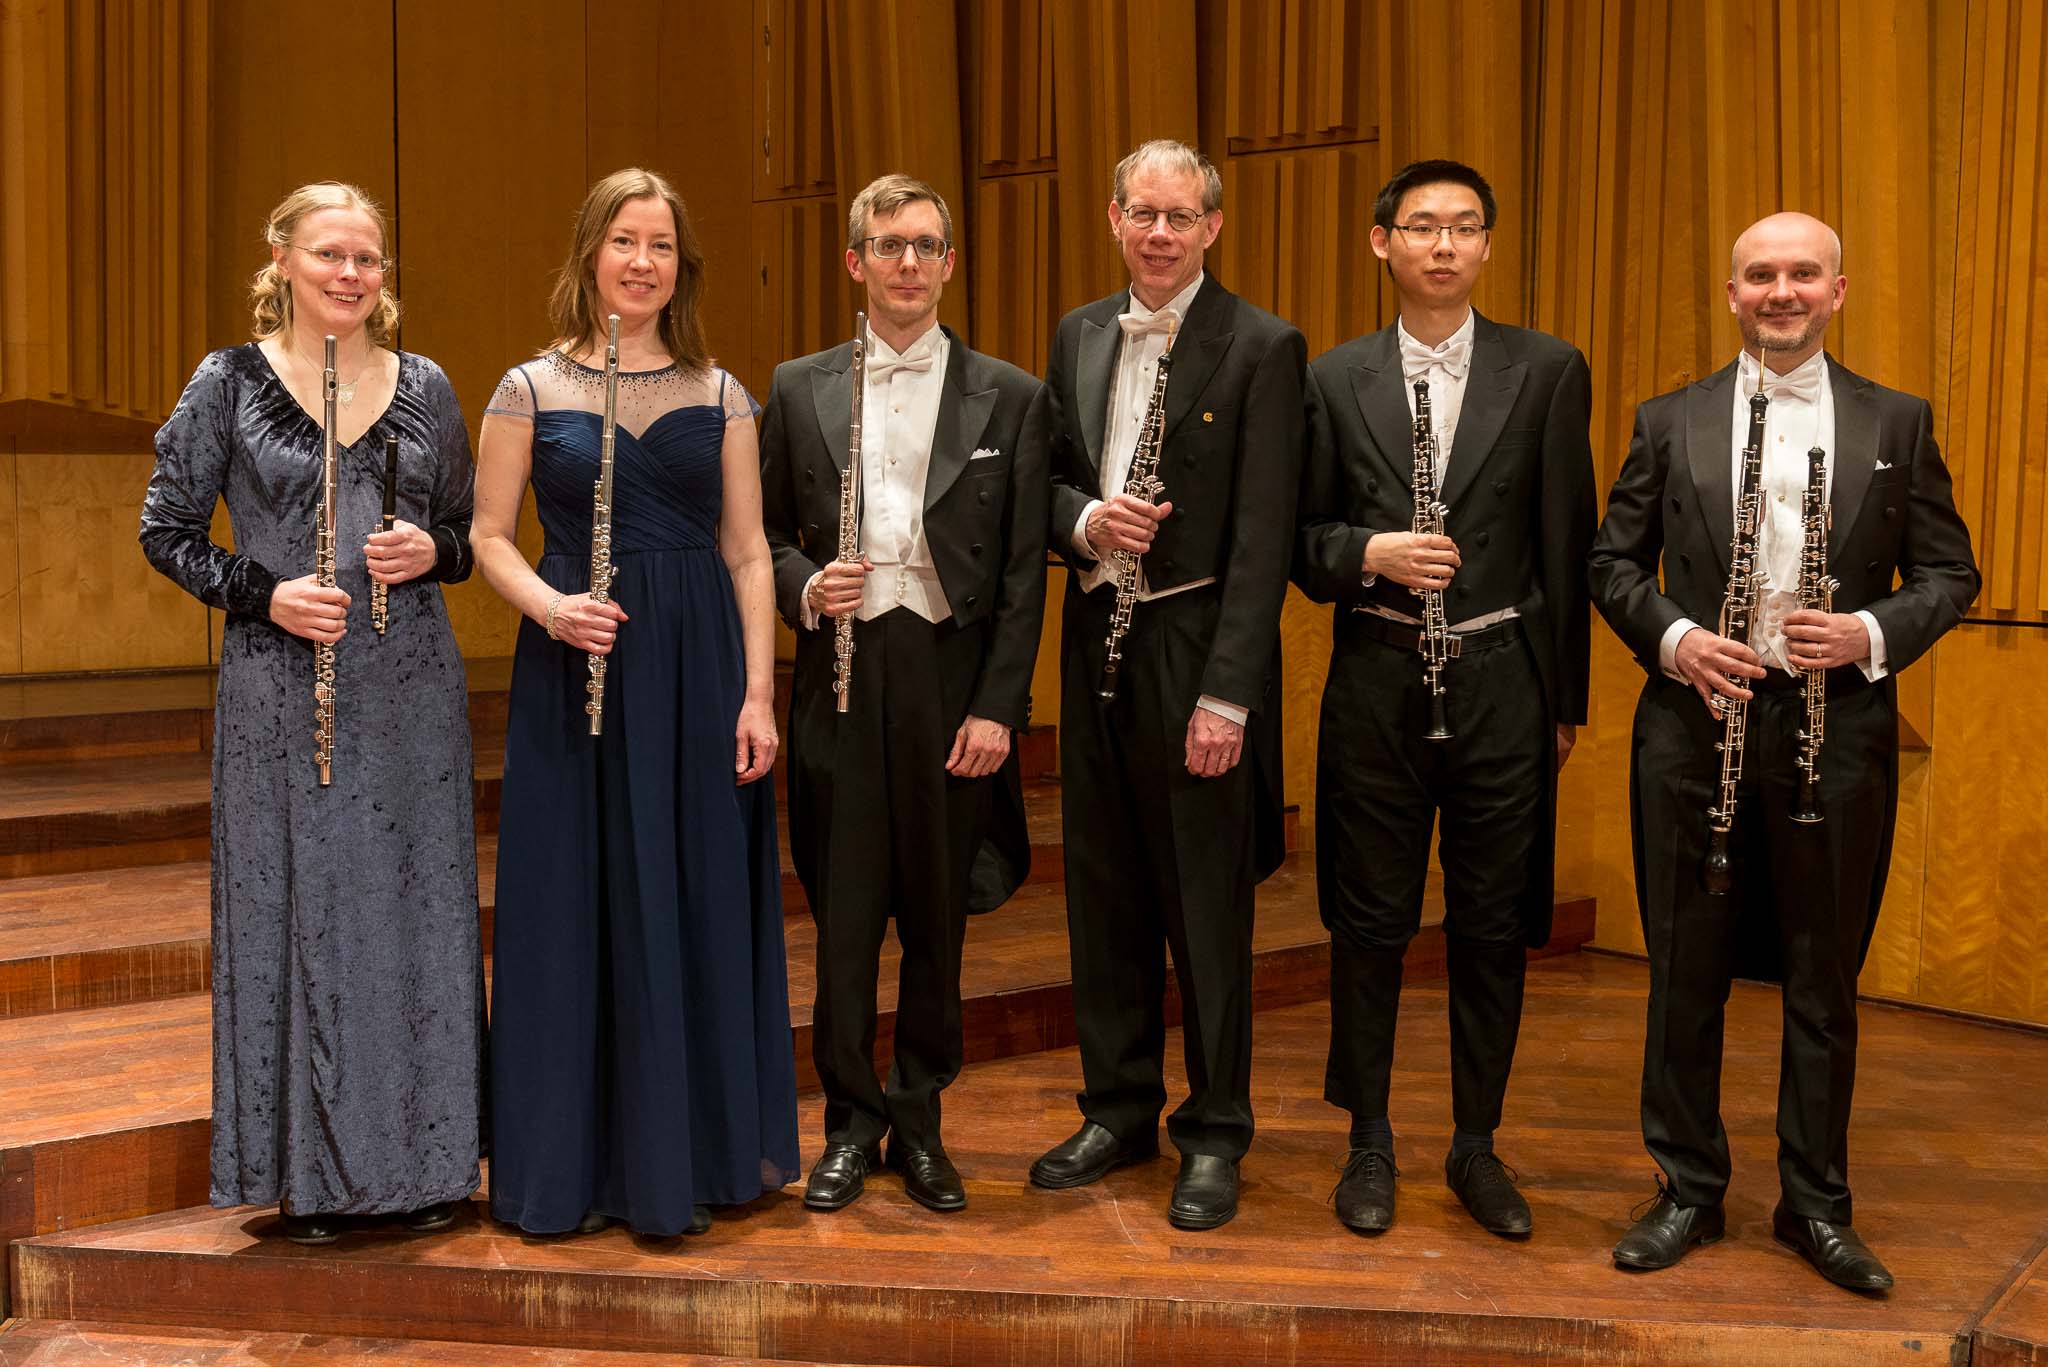 Emma Enström, Sofia Moberg and Jesper Jerkert are holding flutes. Viggo Kann, Jiatong Li and Francisco Vilaplano are holding oboes.